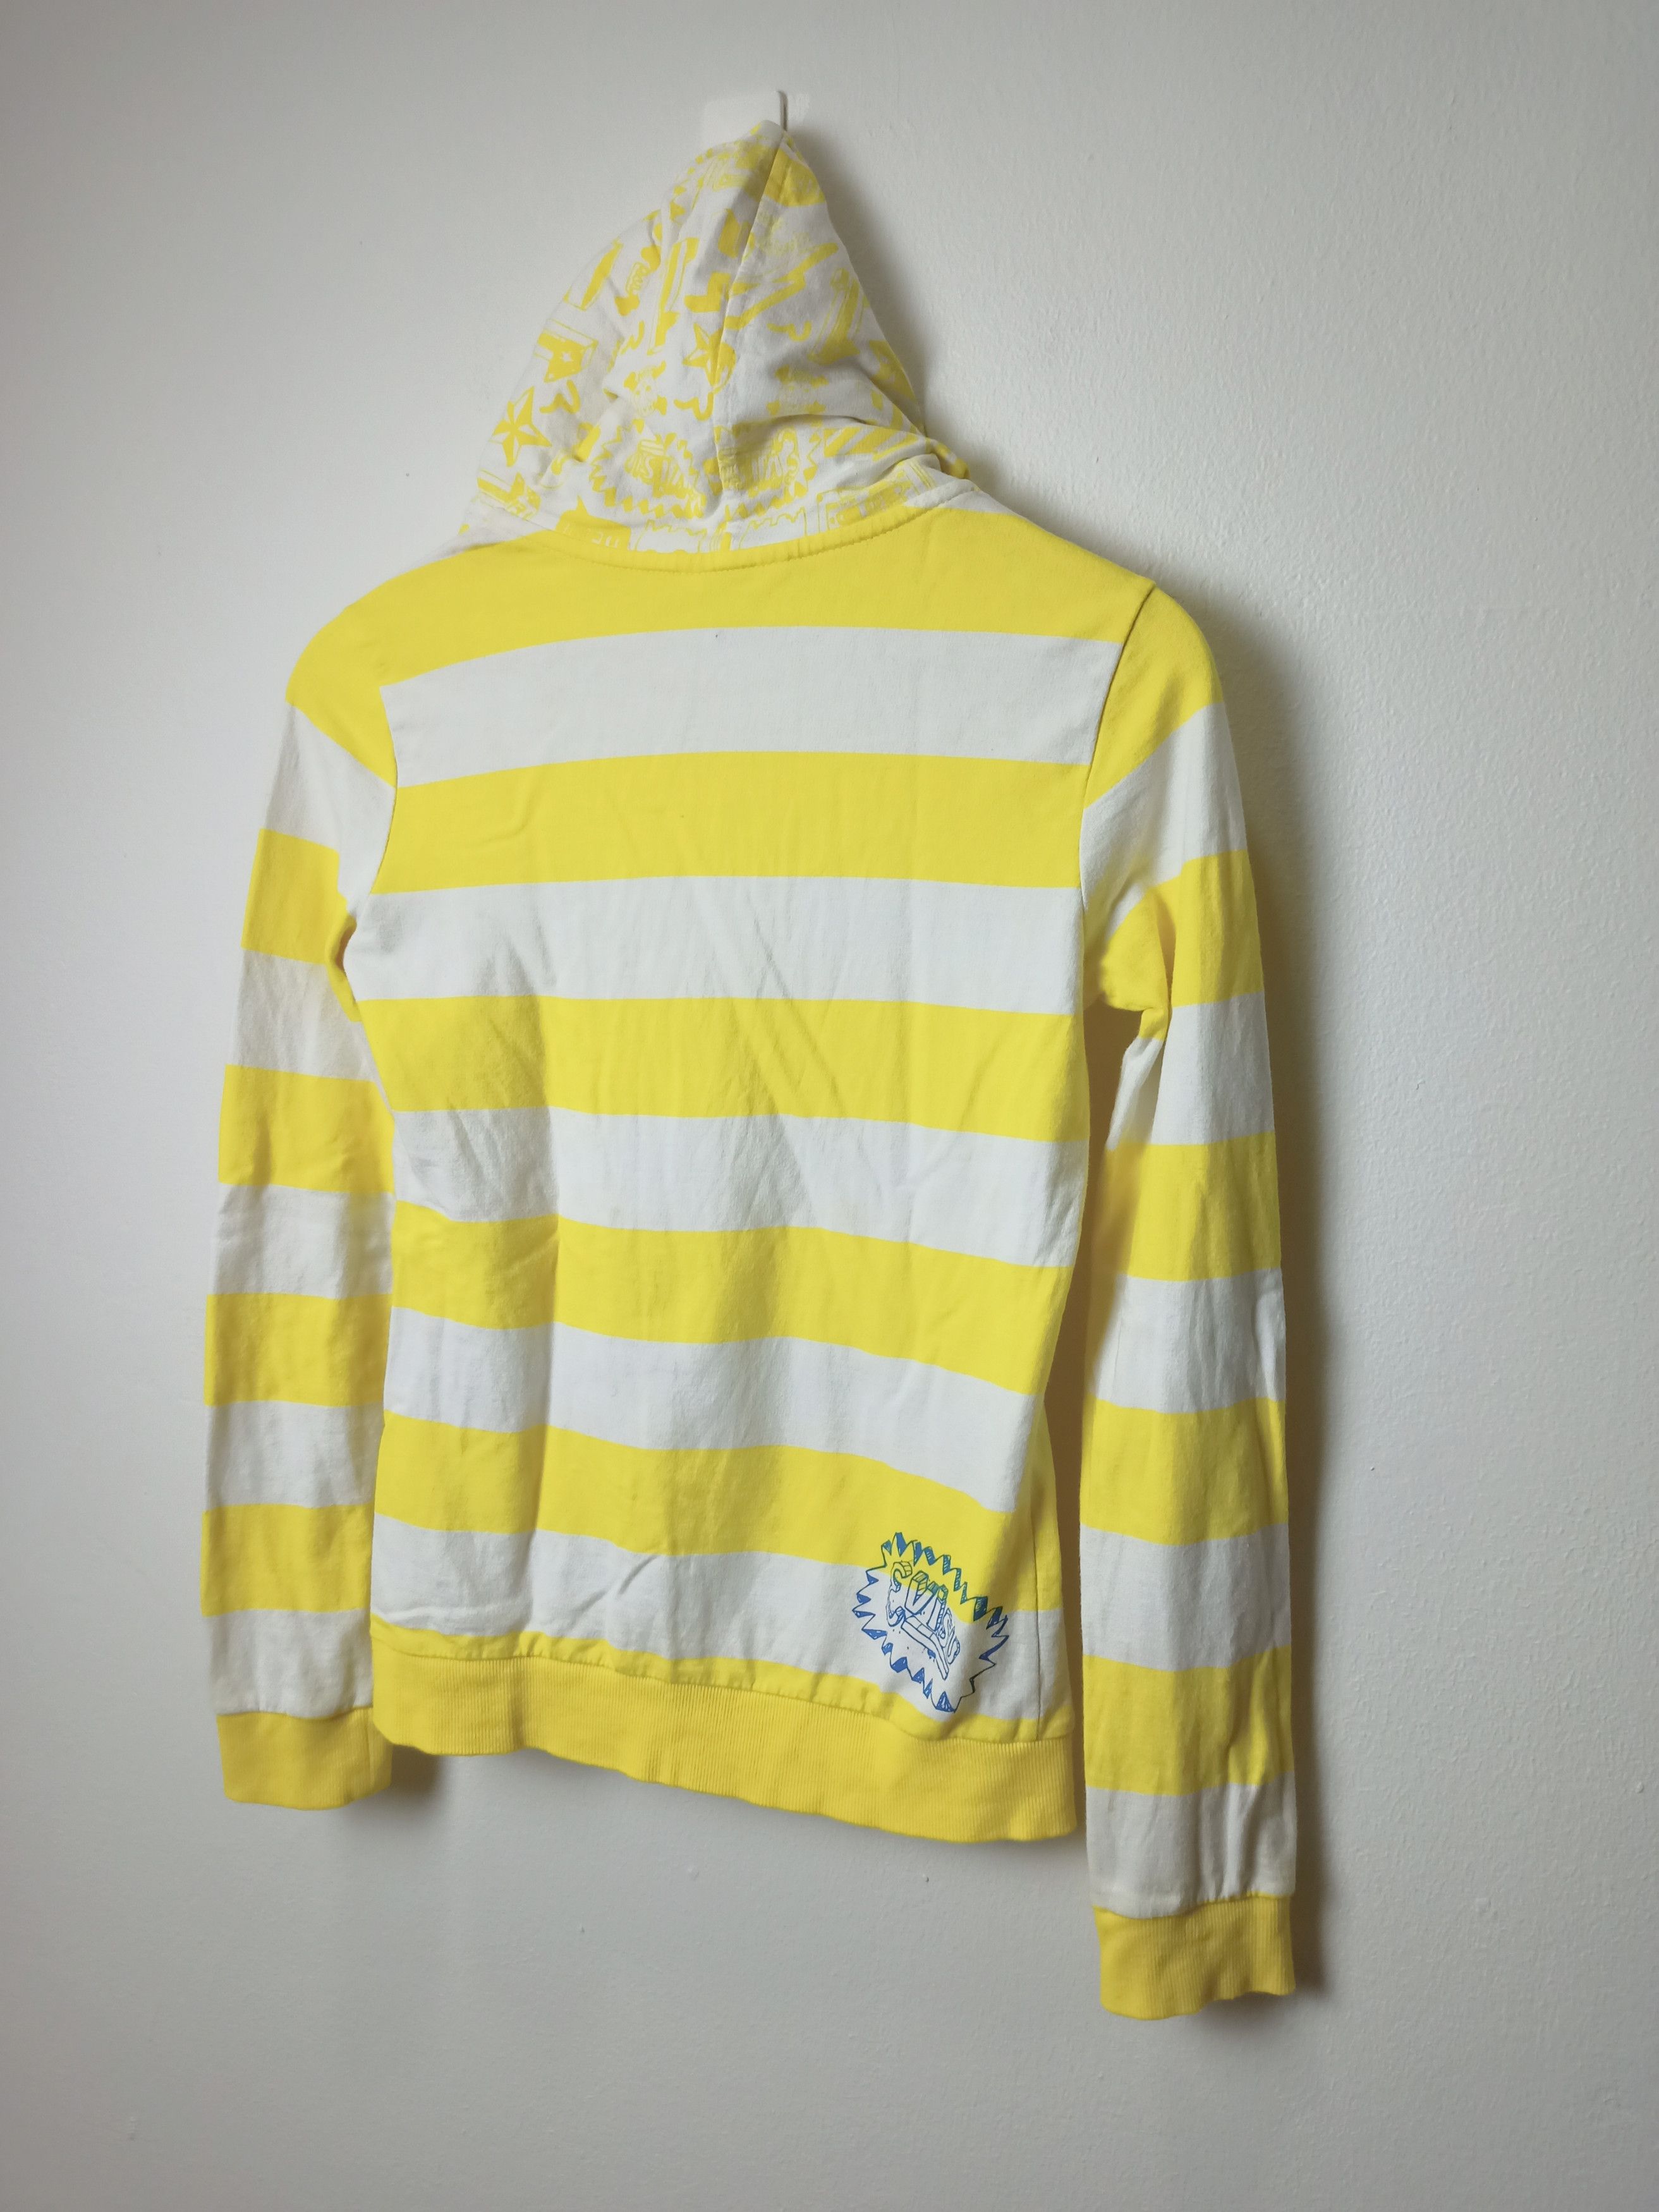 Japanese Brand Evisu Sweetshirt Hoodies Size S / US 4 / IT 40 - 6 Thumbnail